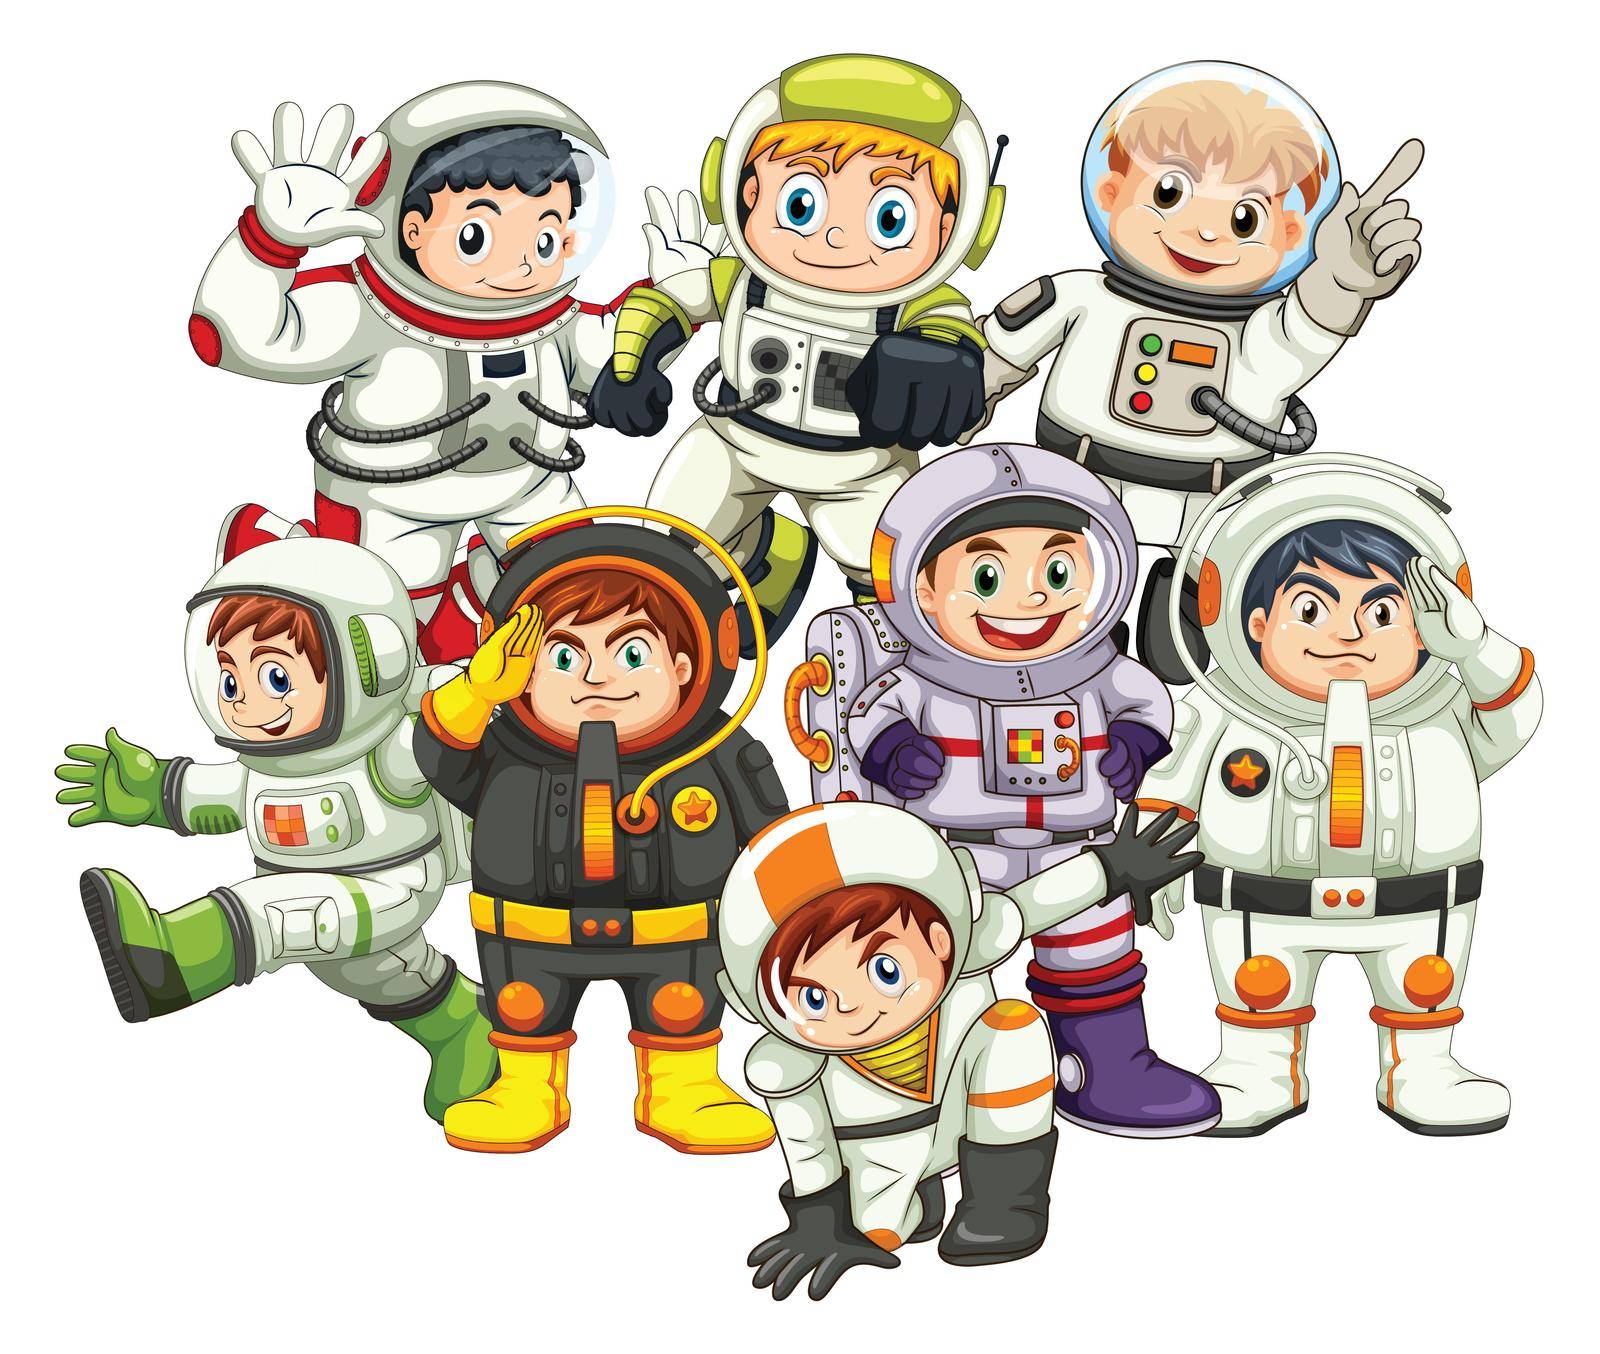 Astronauts wearing spacesuit and helmet